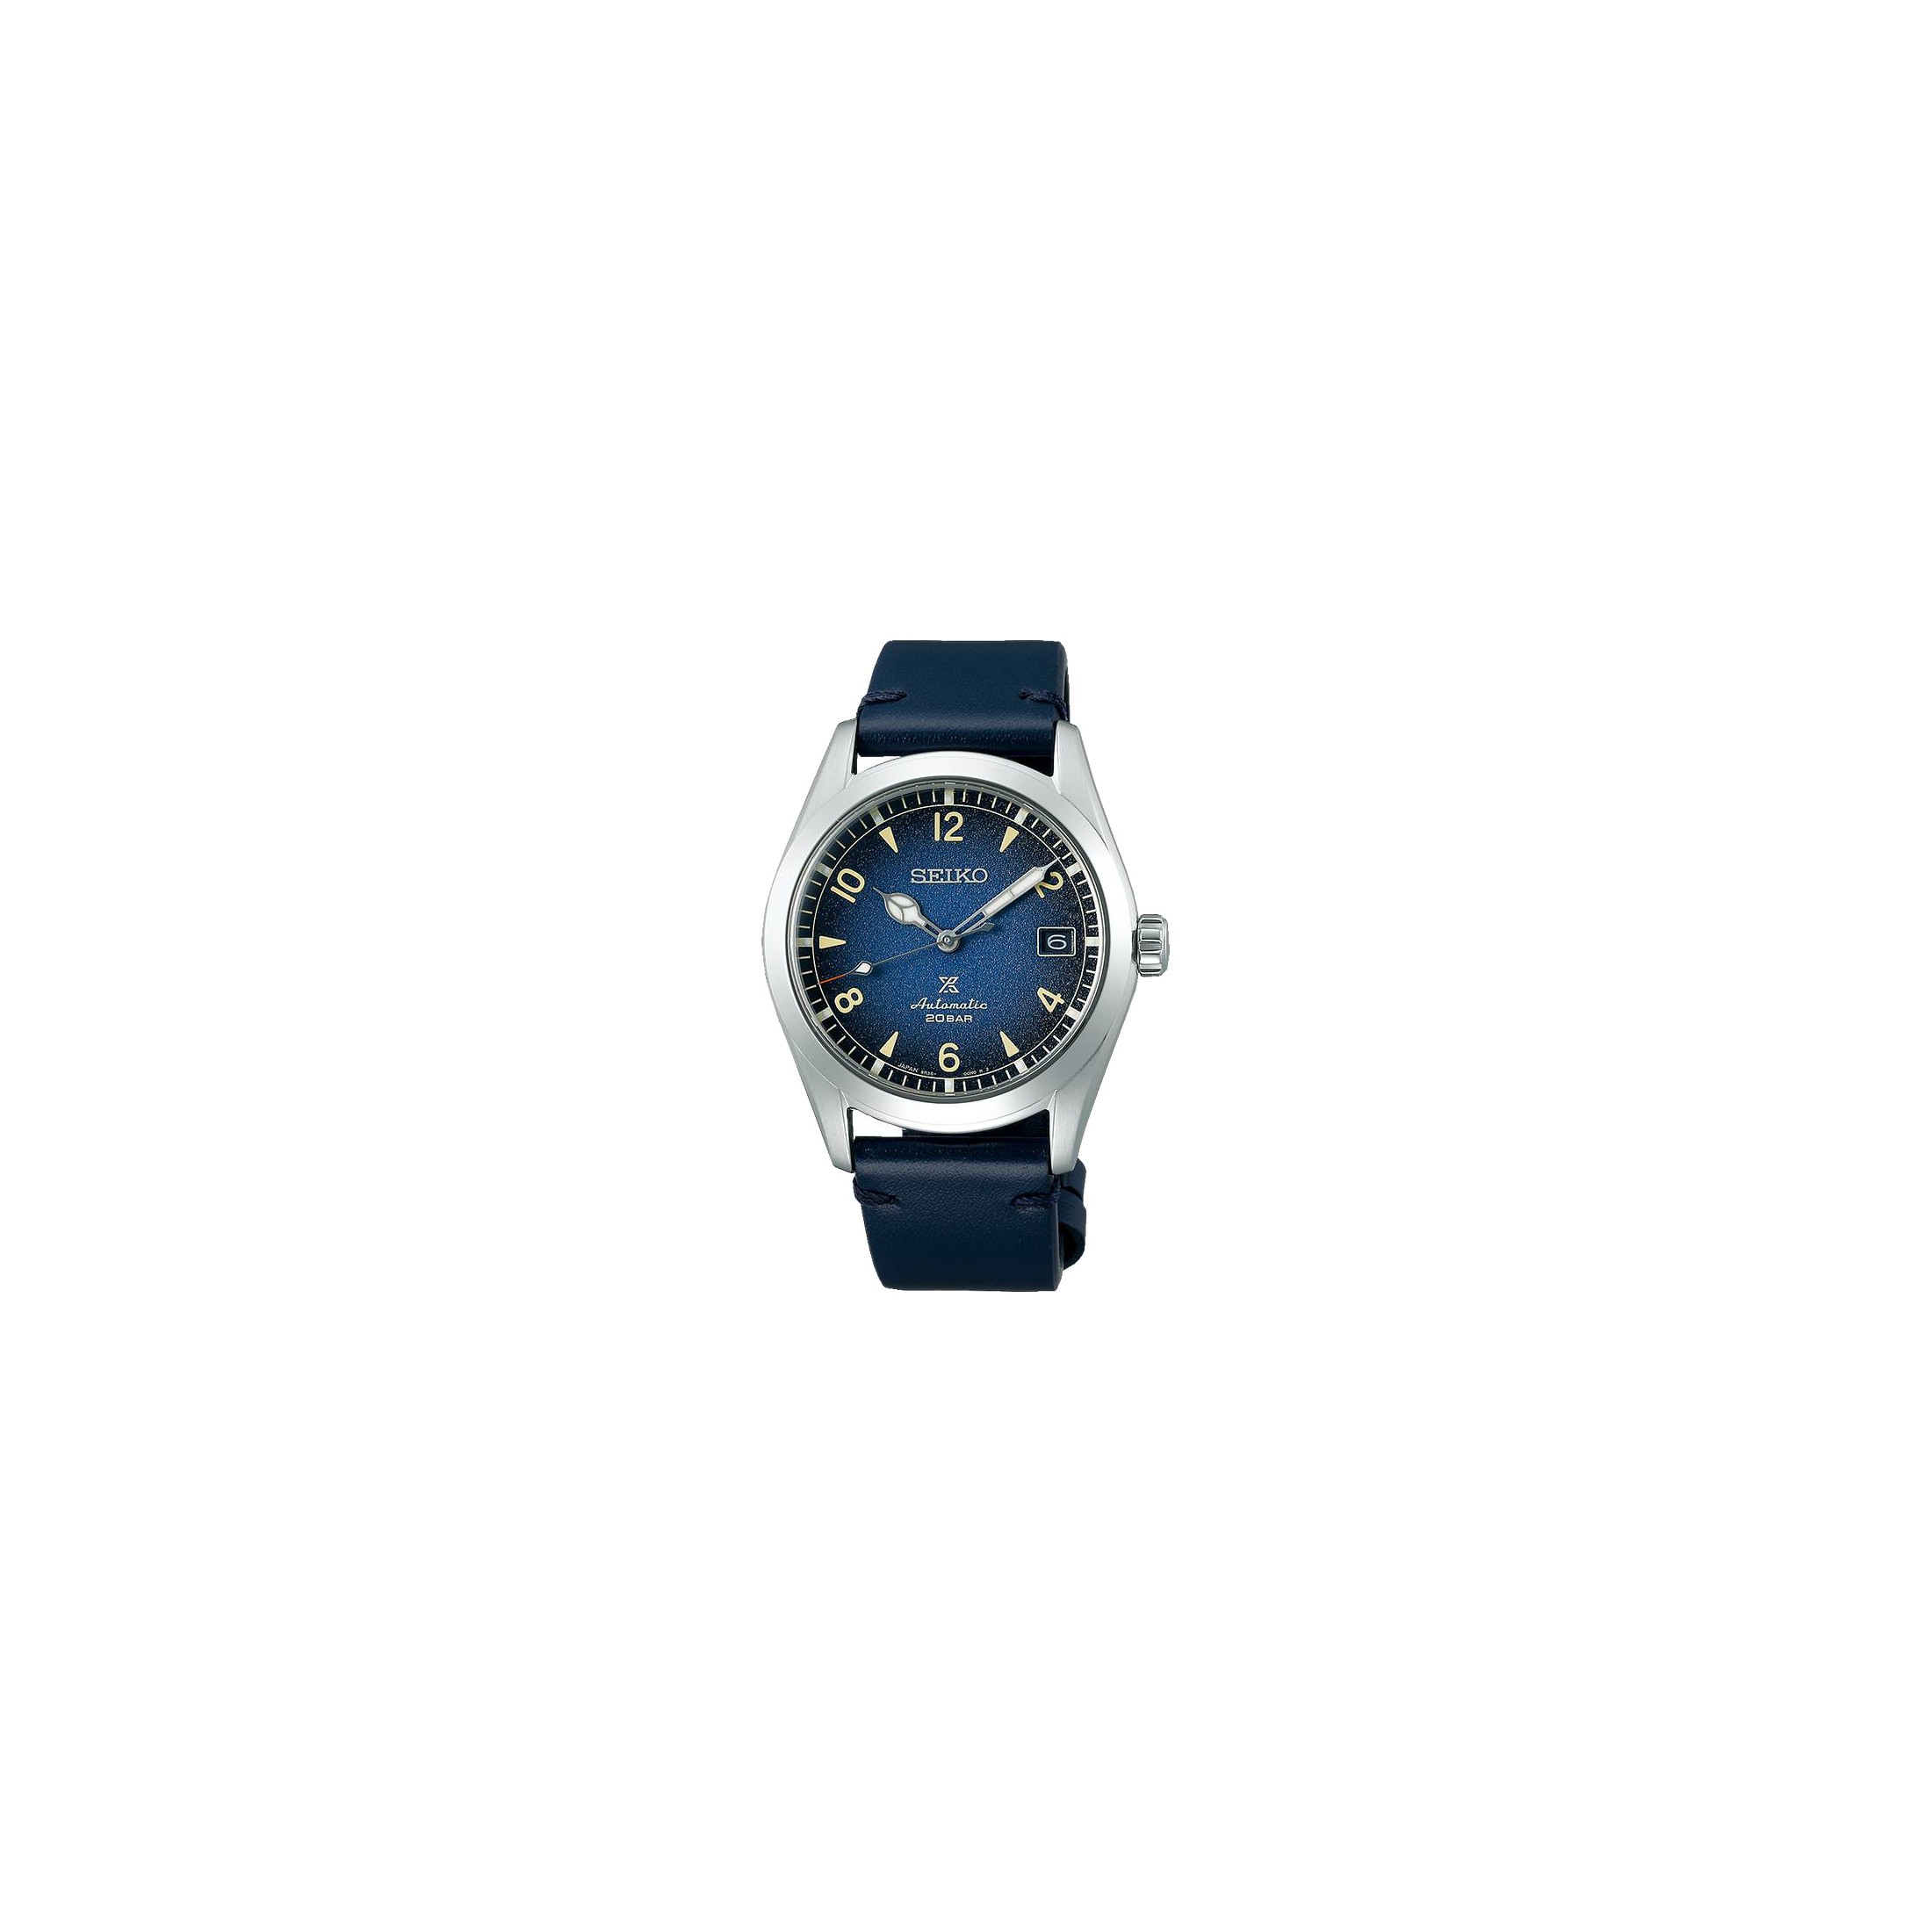 Seiko Prospex Alpinist automatic watch blue dial, Seiko